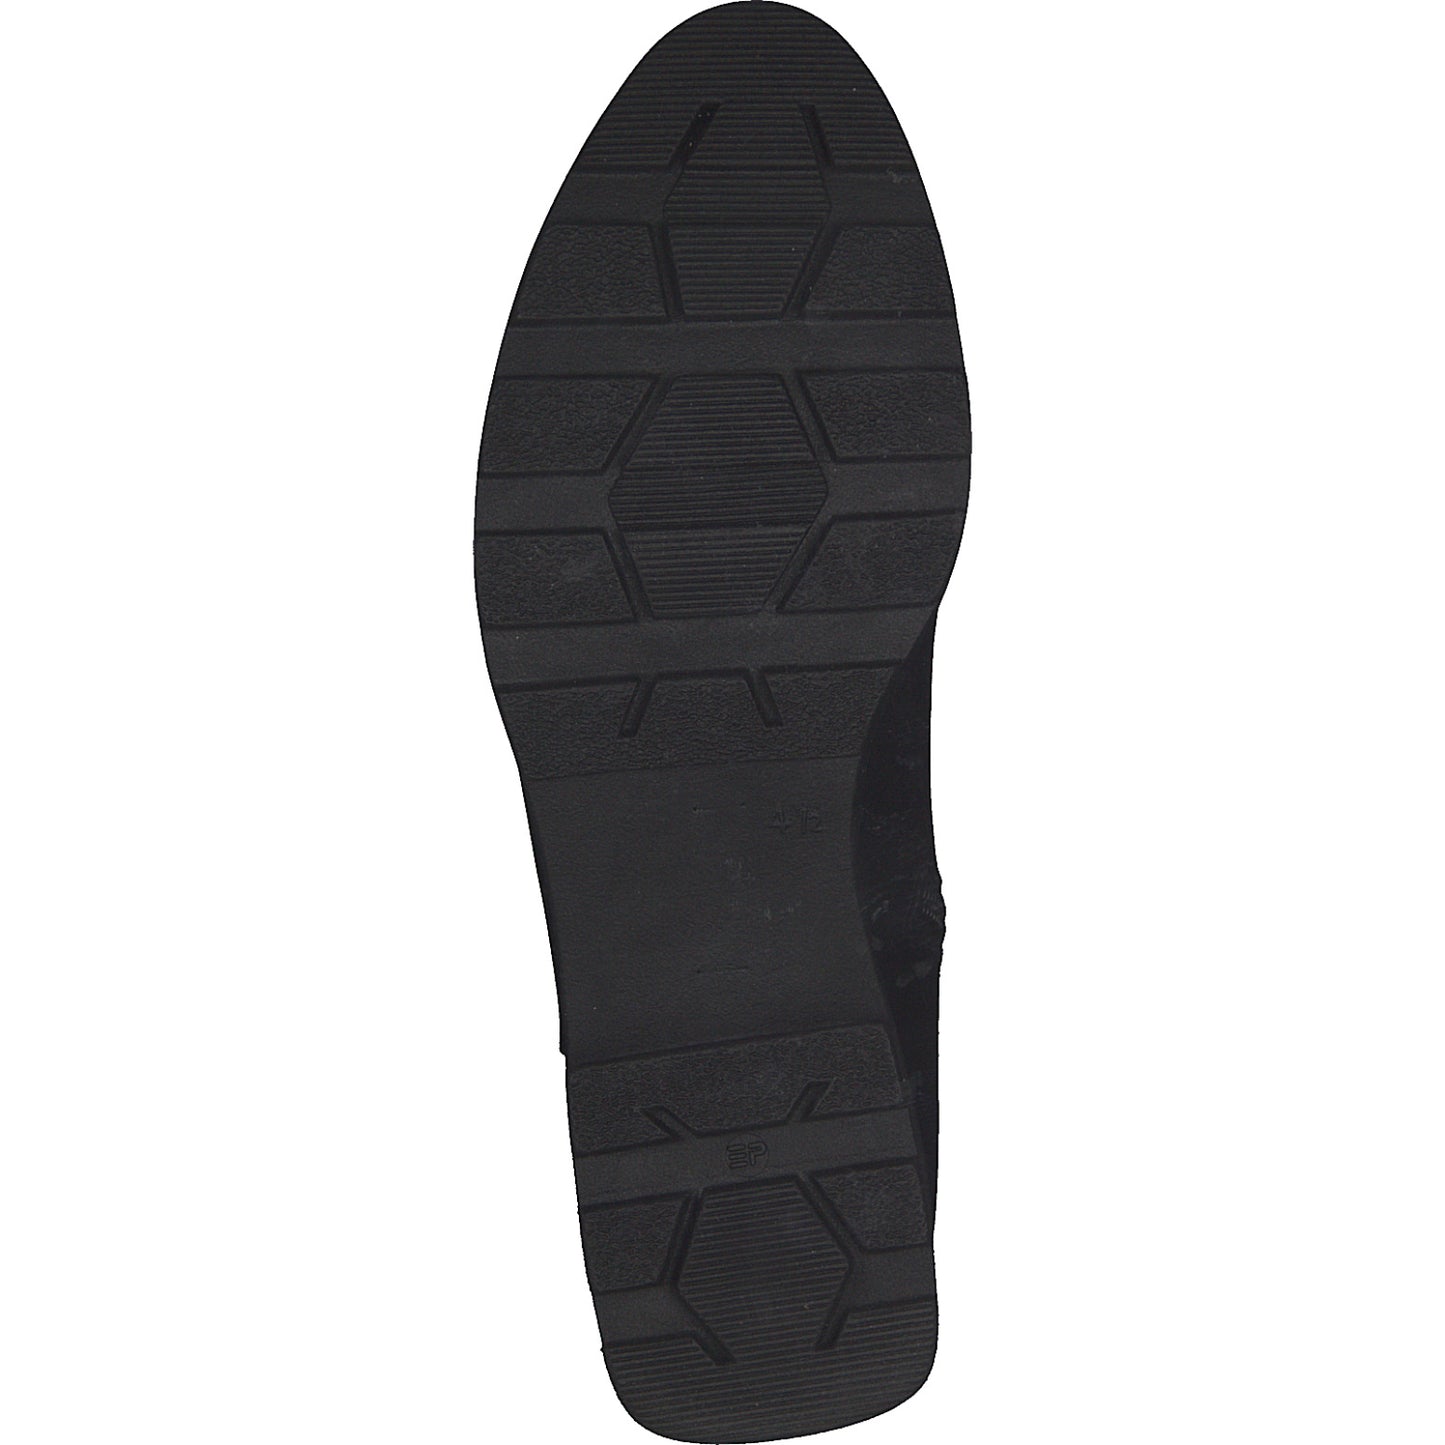 Caprice 9-25612-41 019 Black Boots